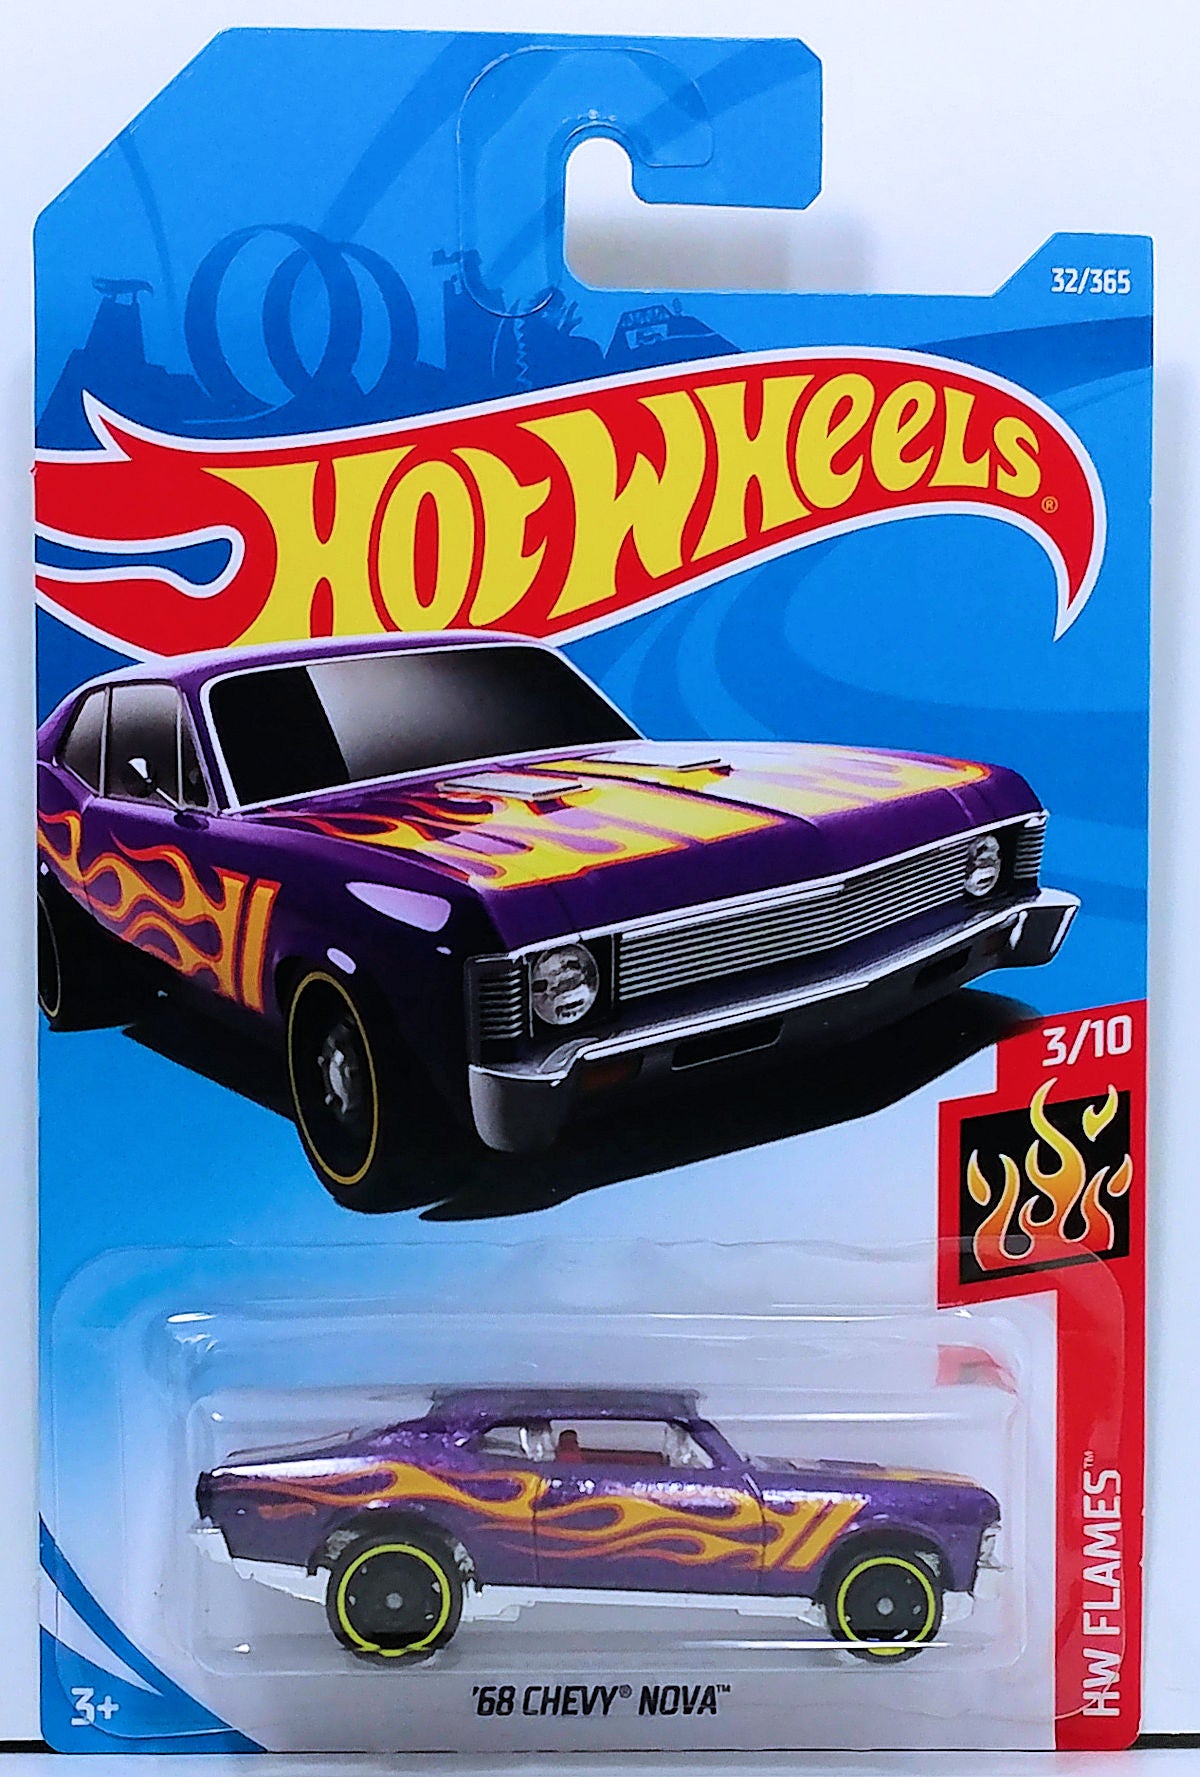 Hot Wheels 2018 - Collector # 032/365 - '68 Chevy Nova - IC